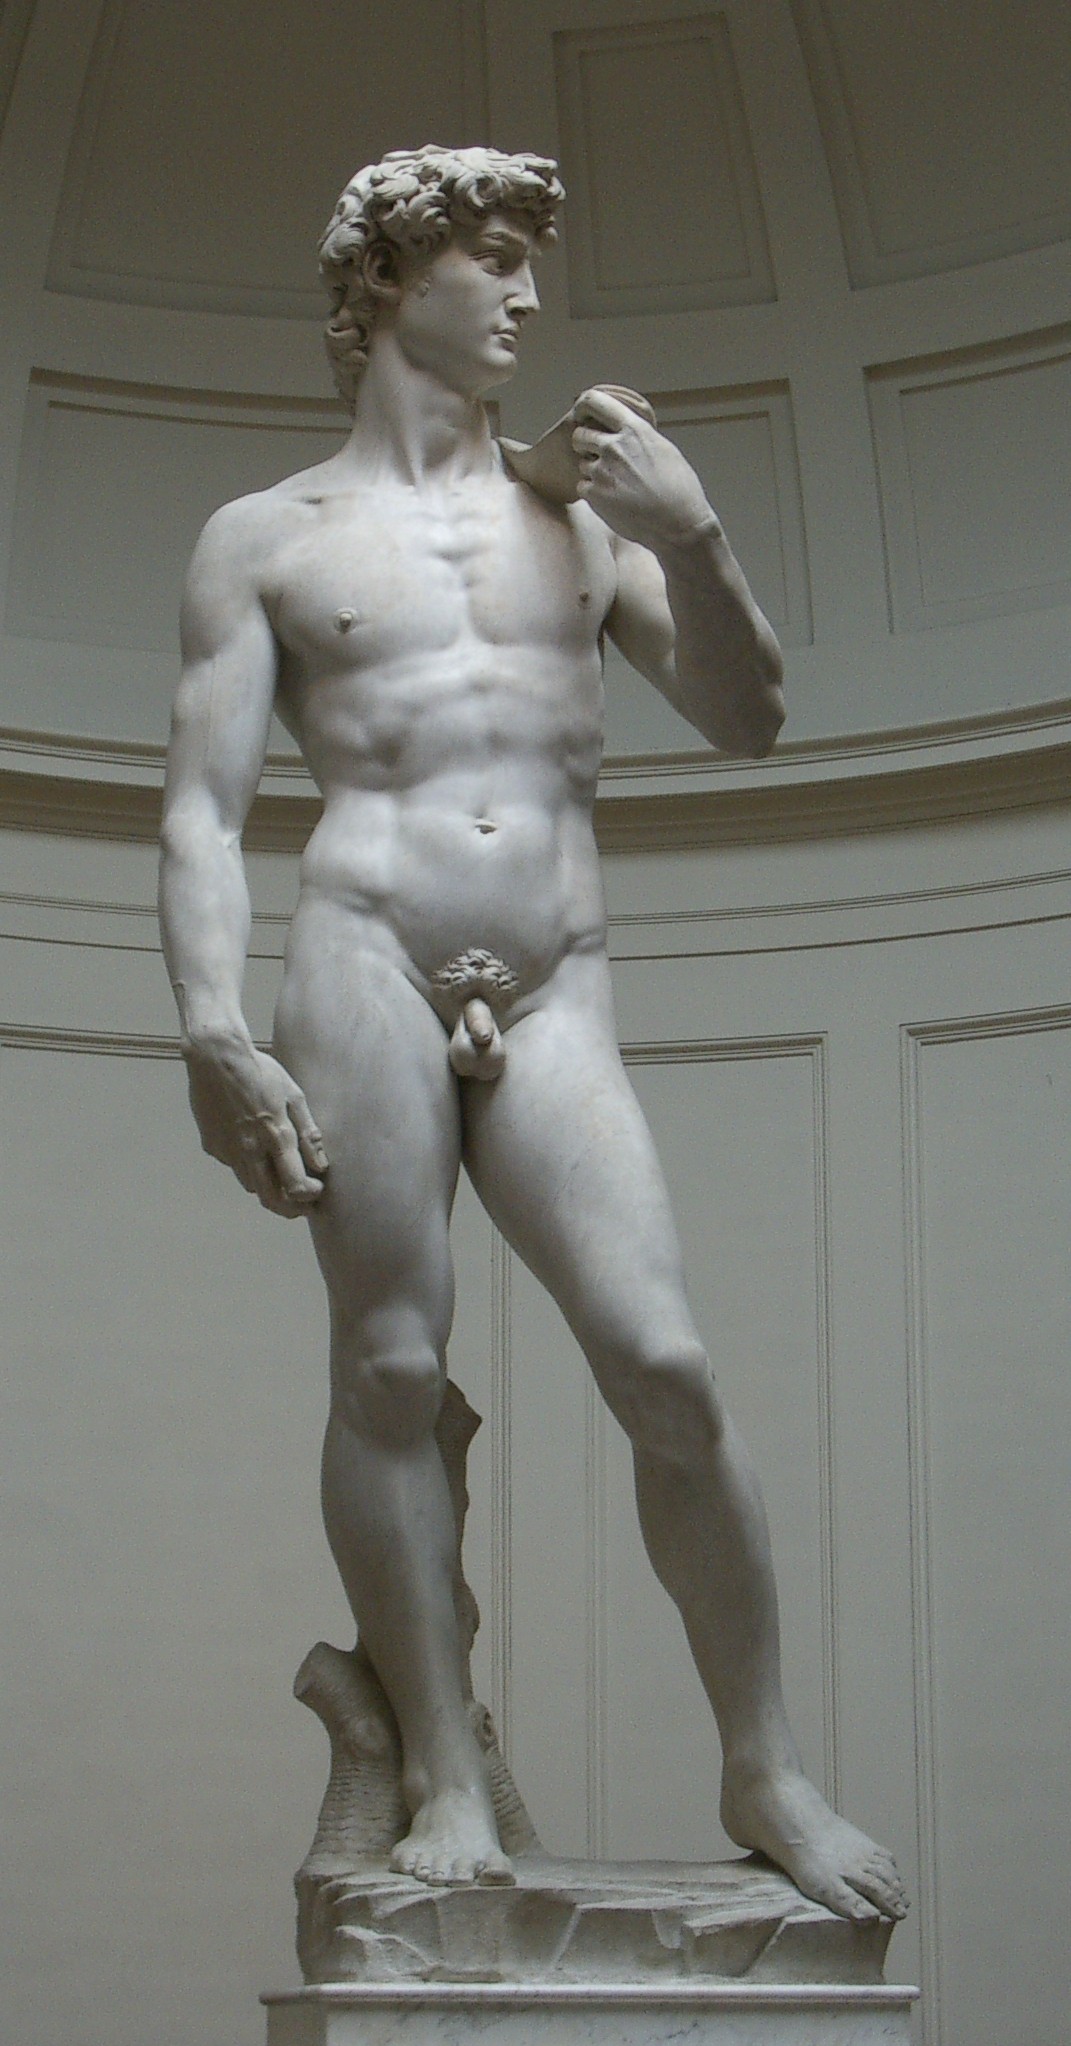 David by Michelangelo di Lodovico Buonarroti Simoni - 1501–04 - 4.34 x 5.17 m 